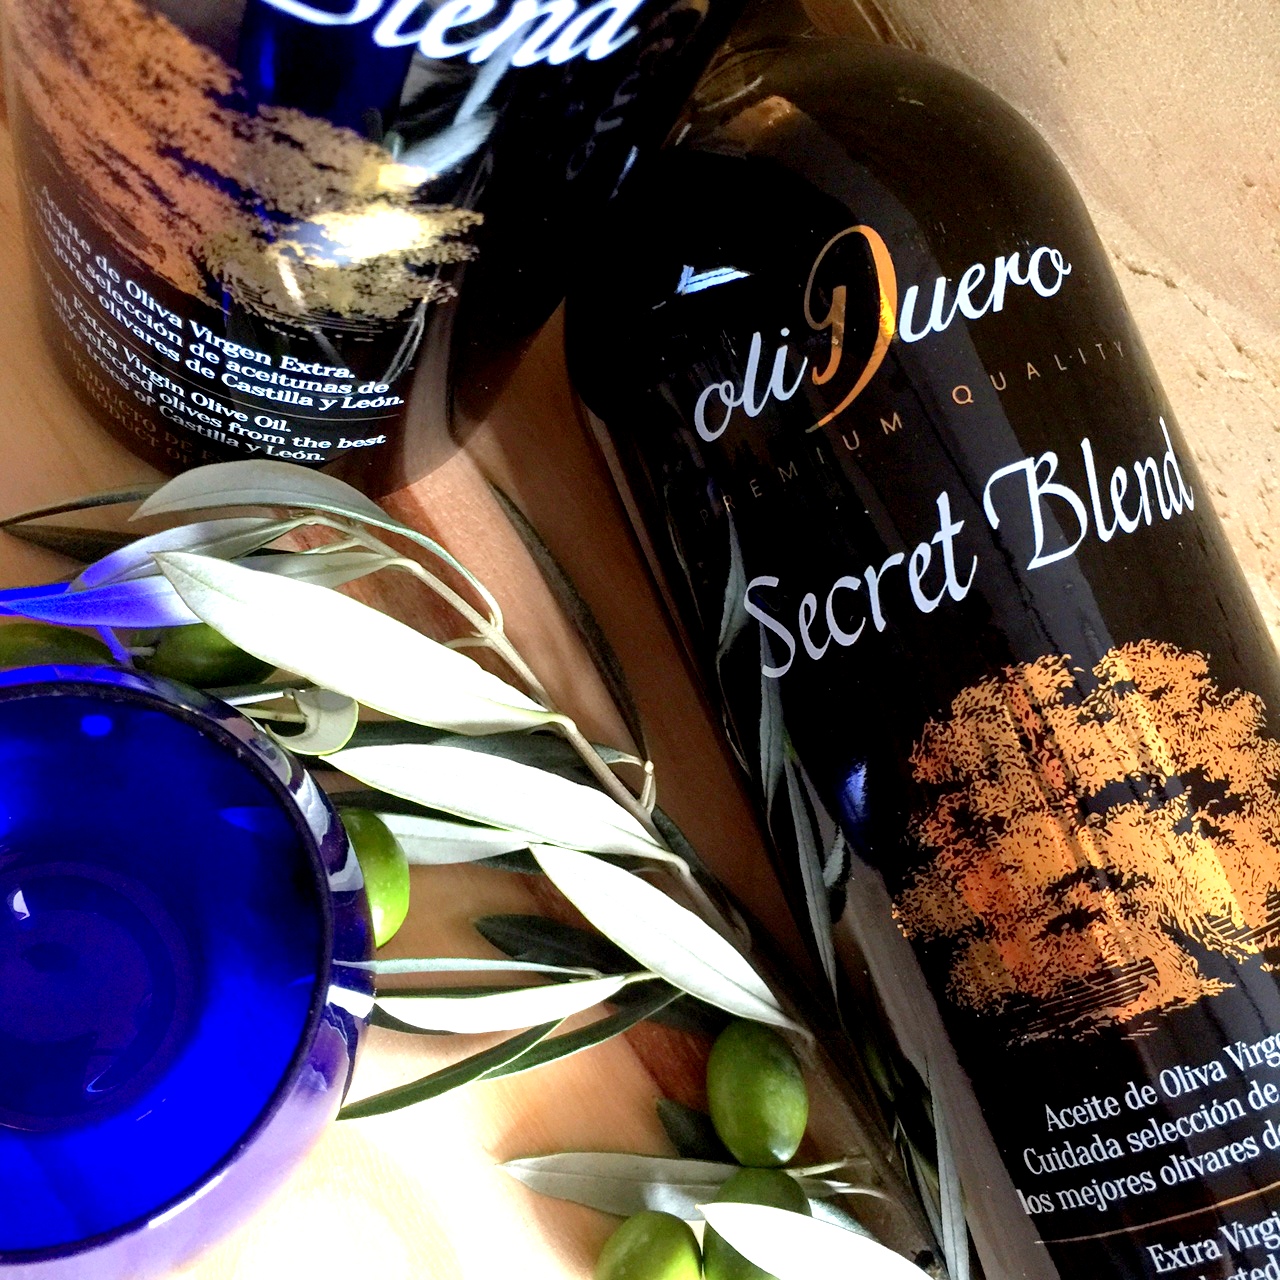 Aceite de oliva virgen extra - Oliduero Secret Blend